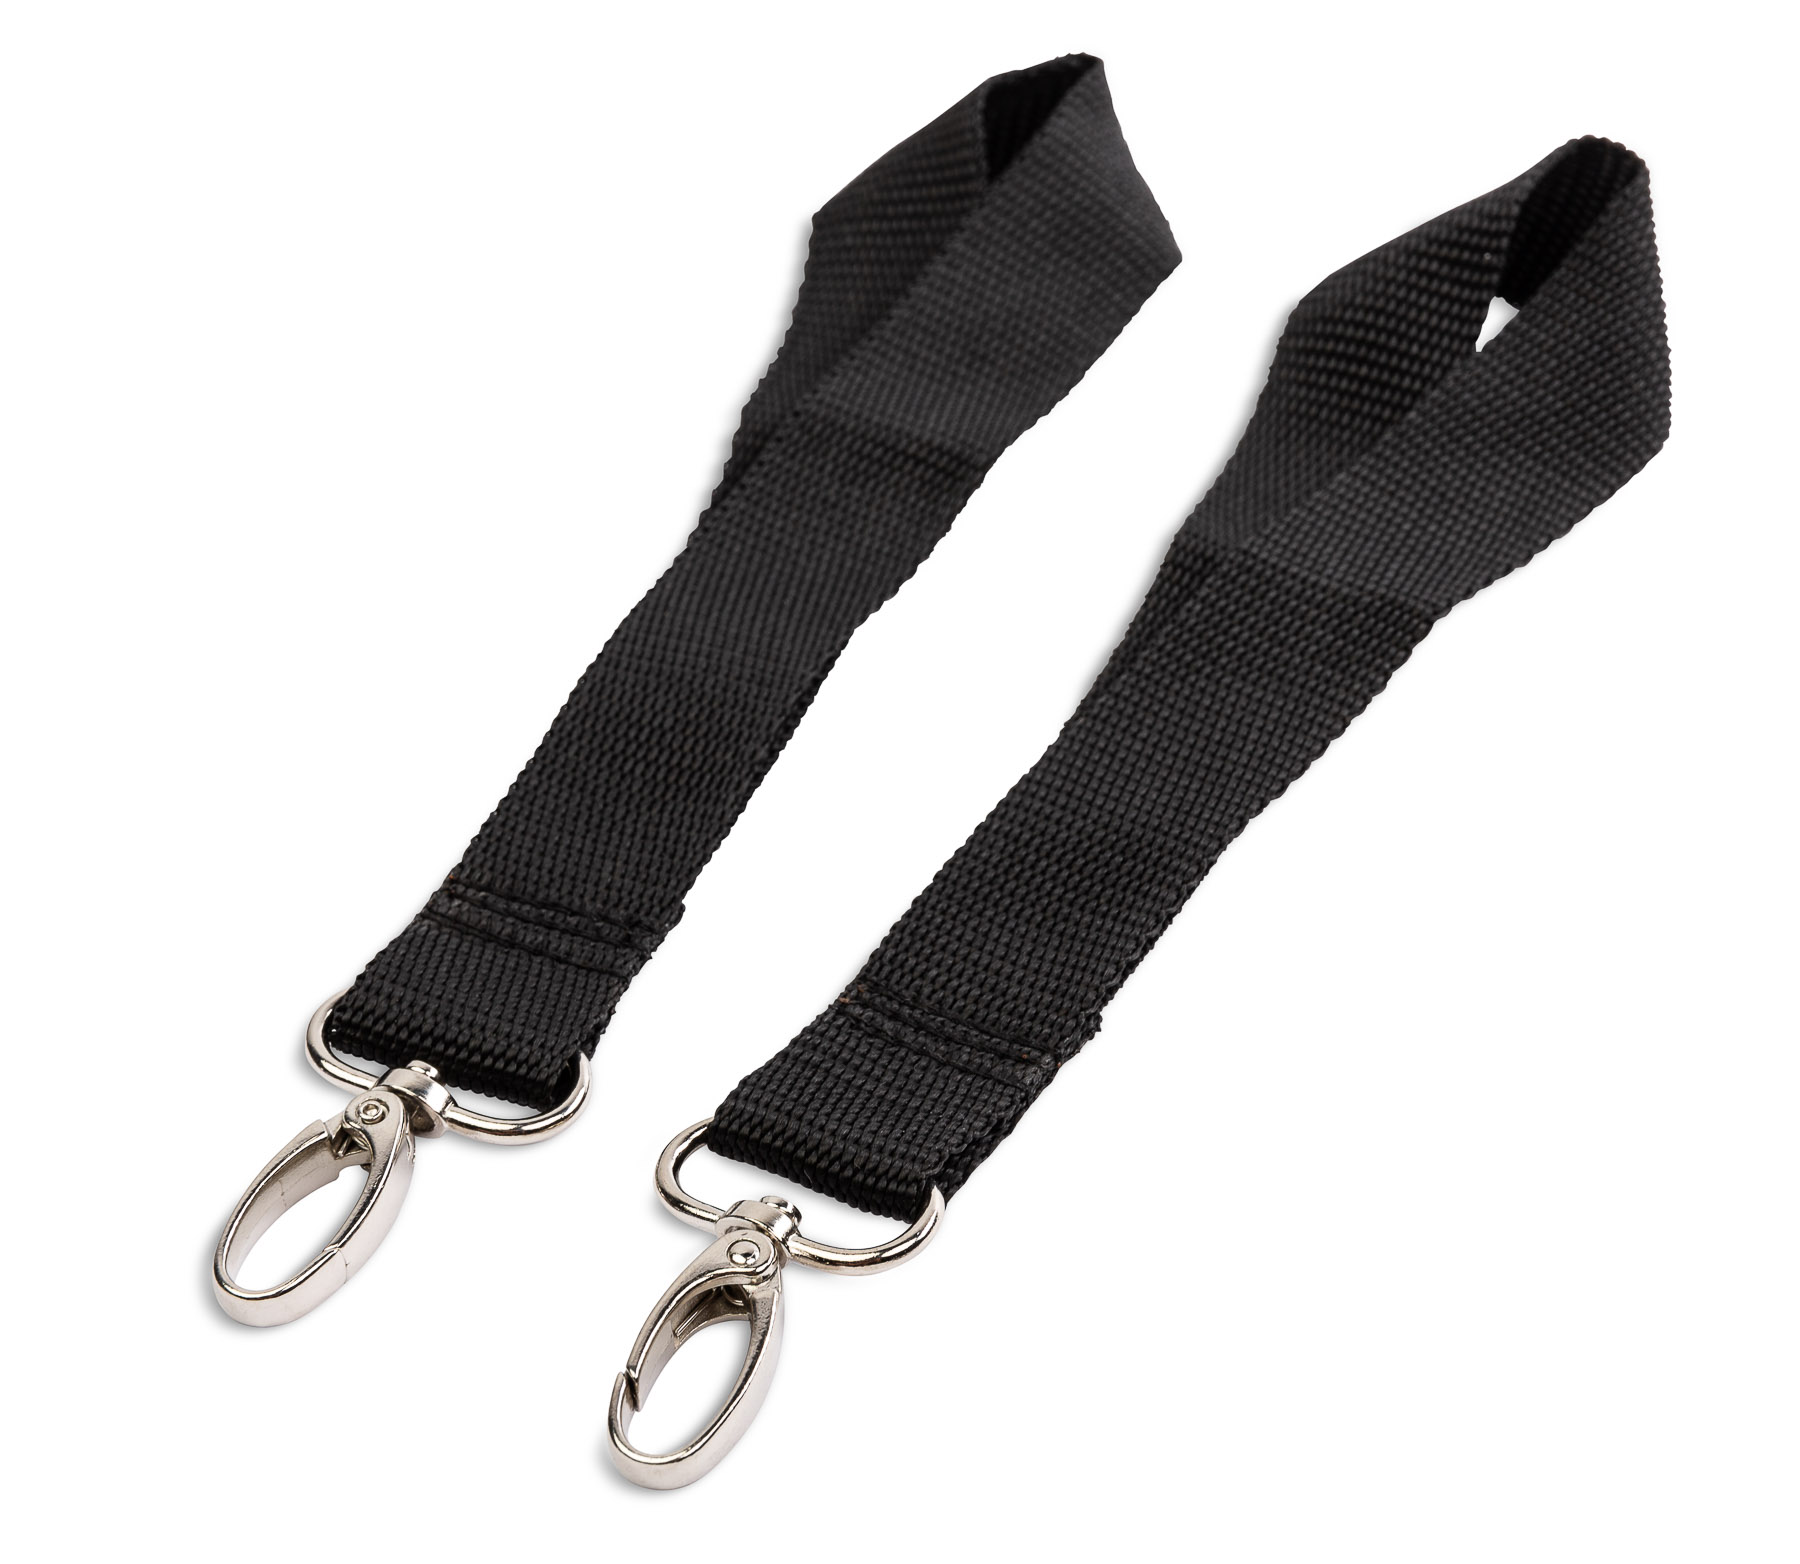 Hooks for fastening to the stroller